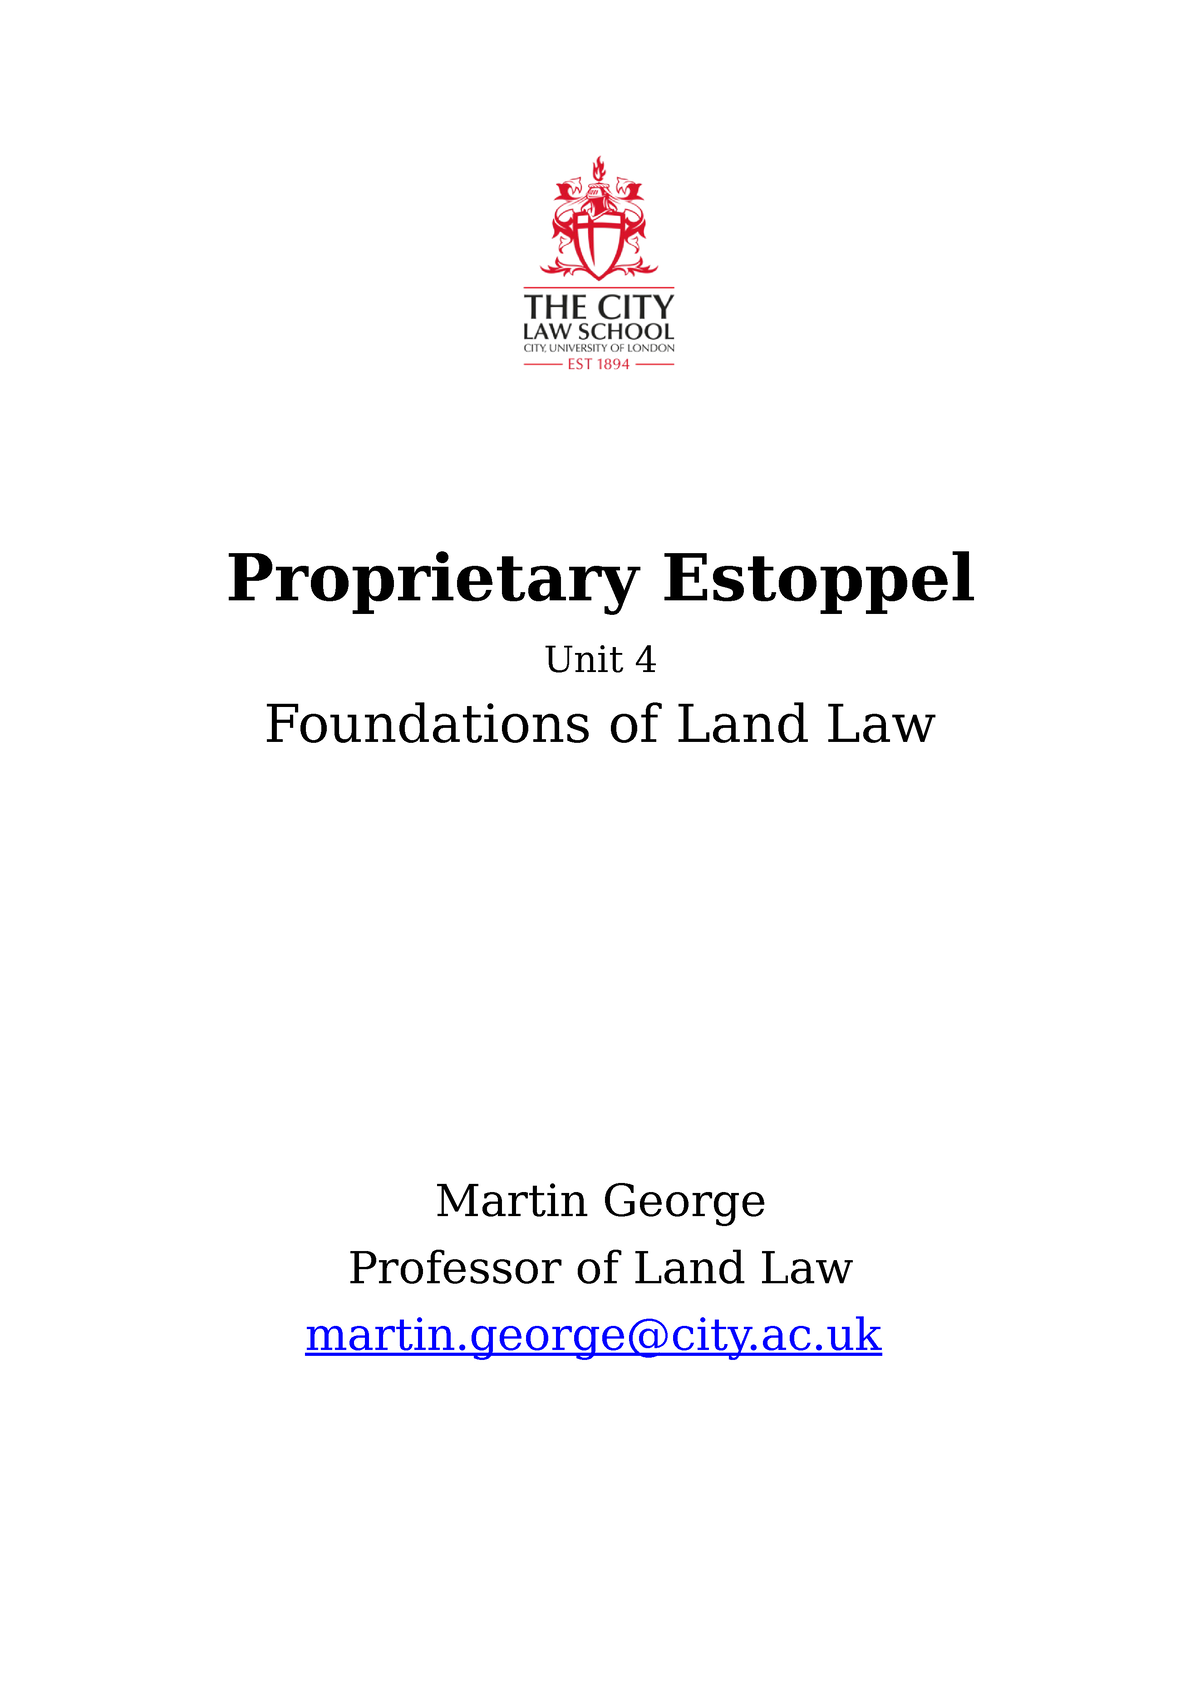 land law essay on proprietary estoppel